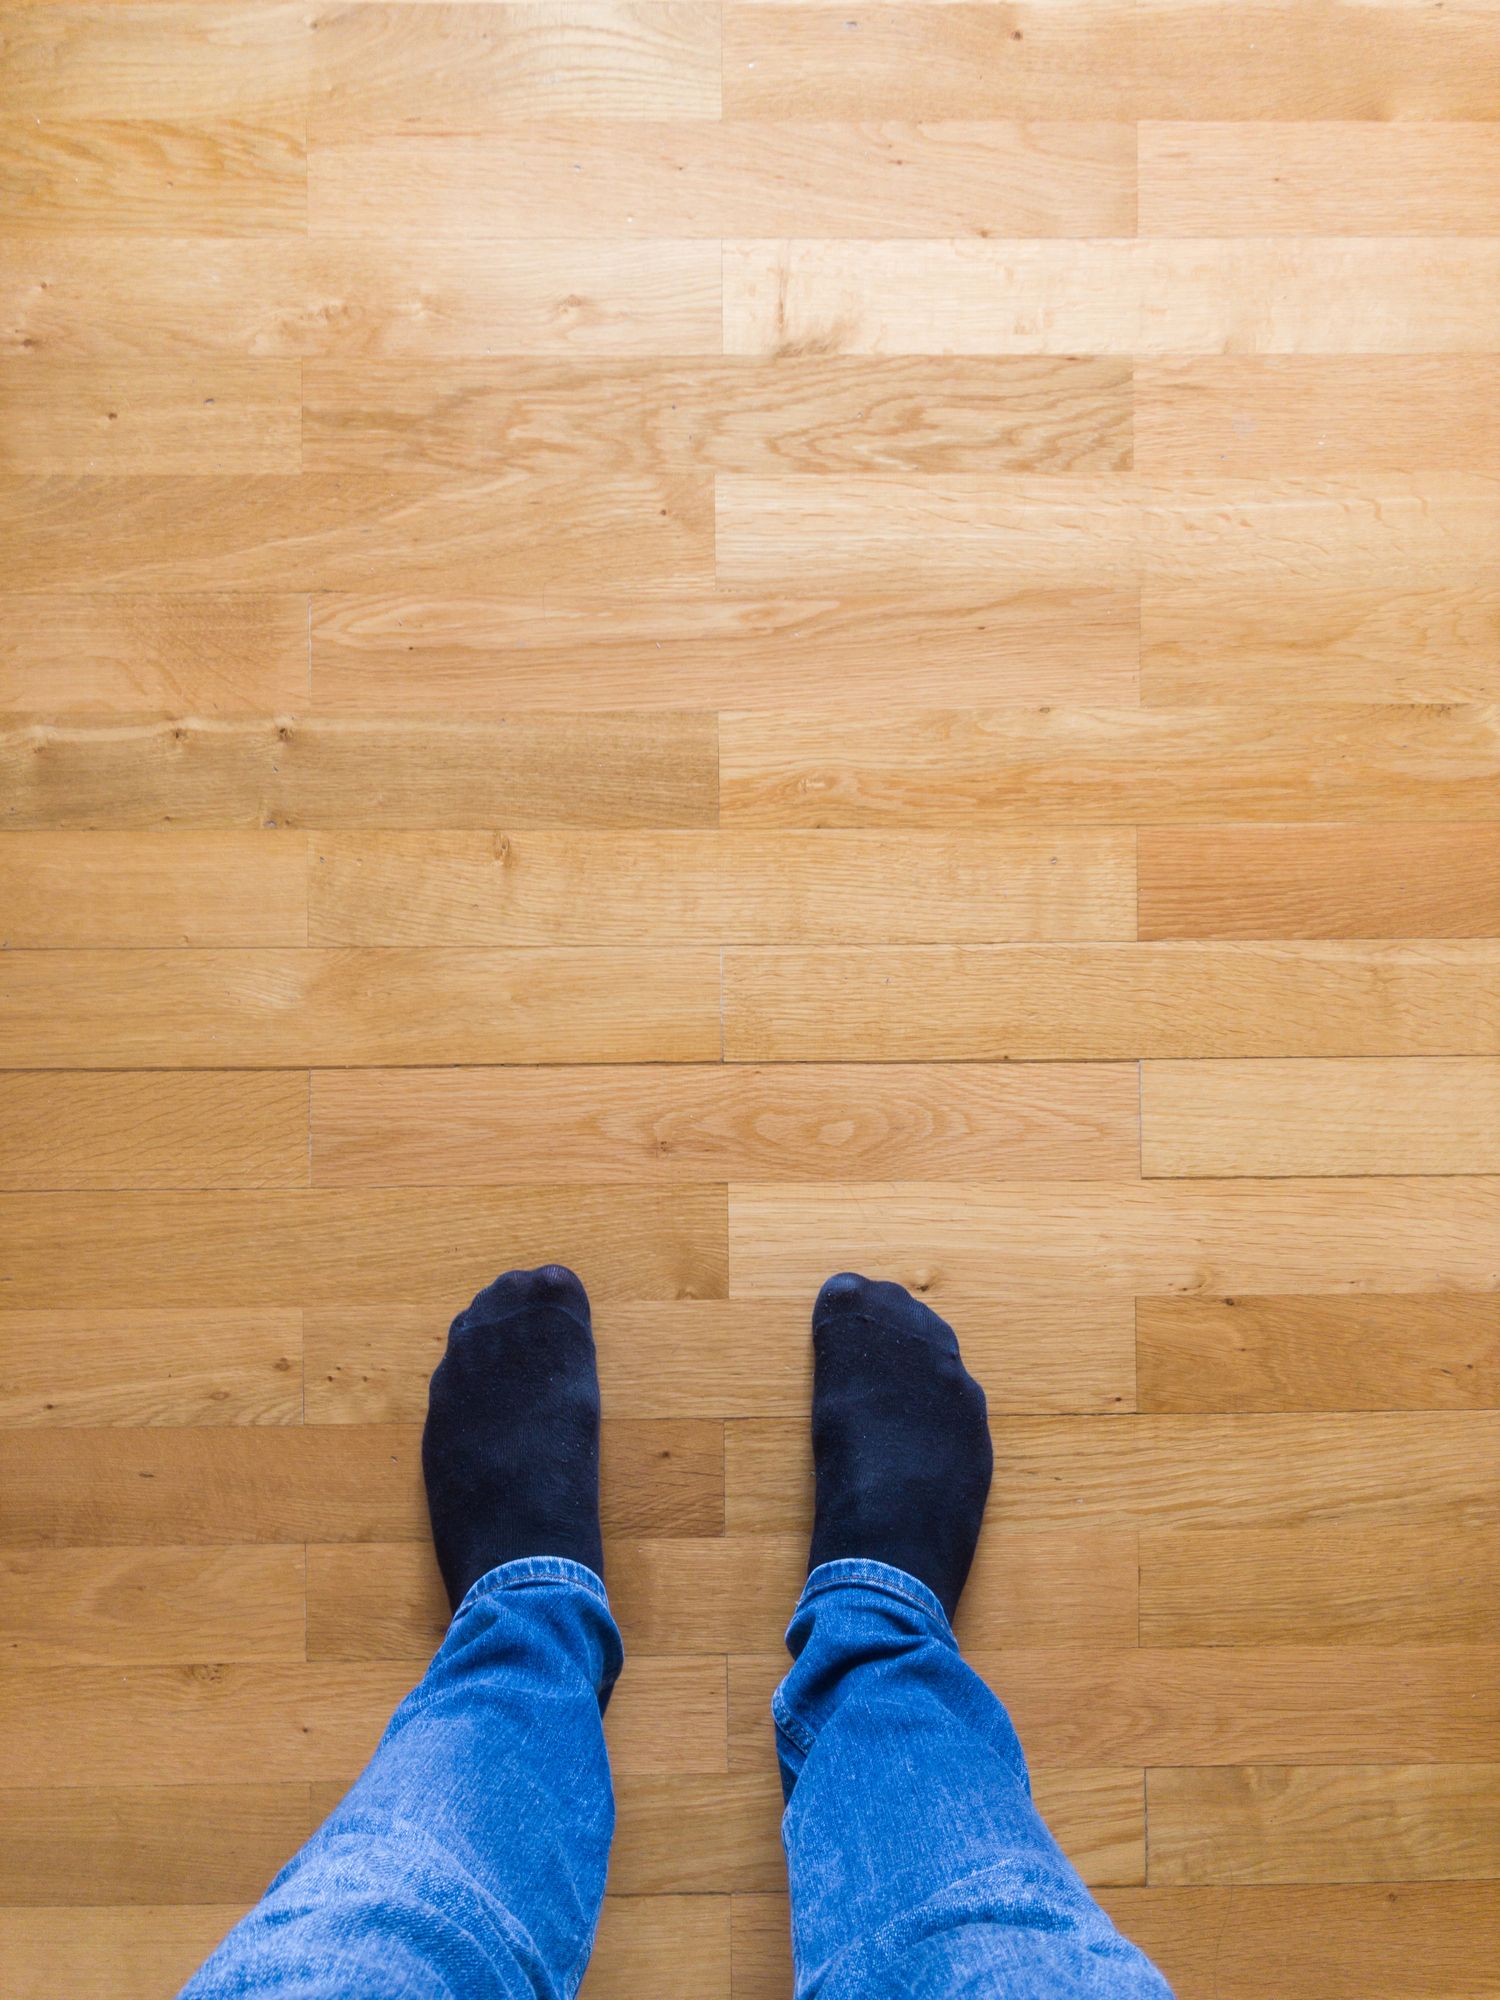 Squeaky Floor Repair, How To Remove Crazy Glue From Hardwood Floors